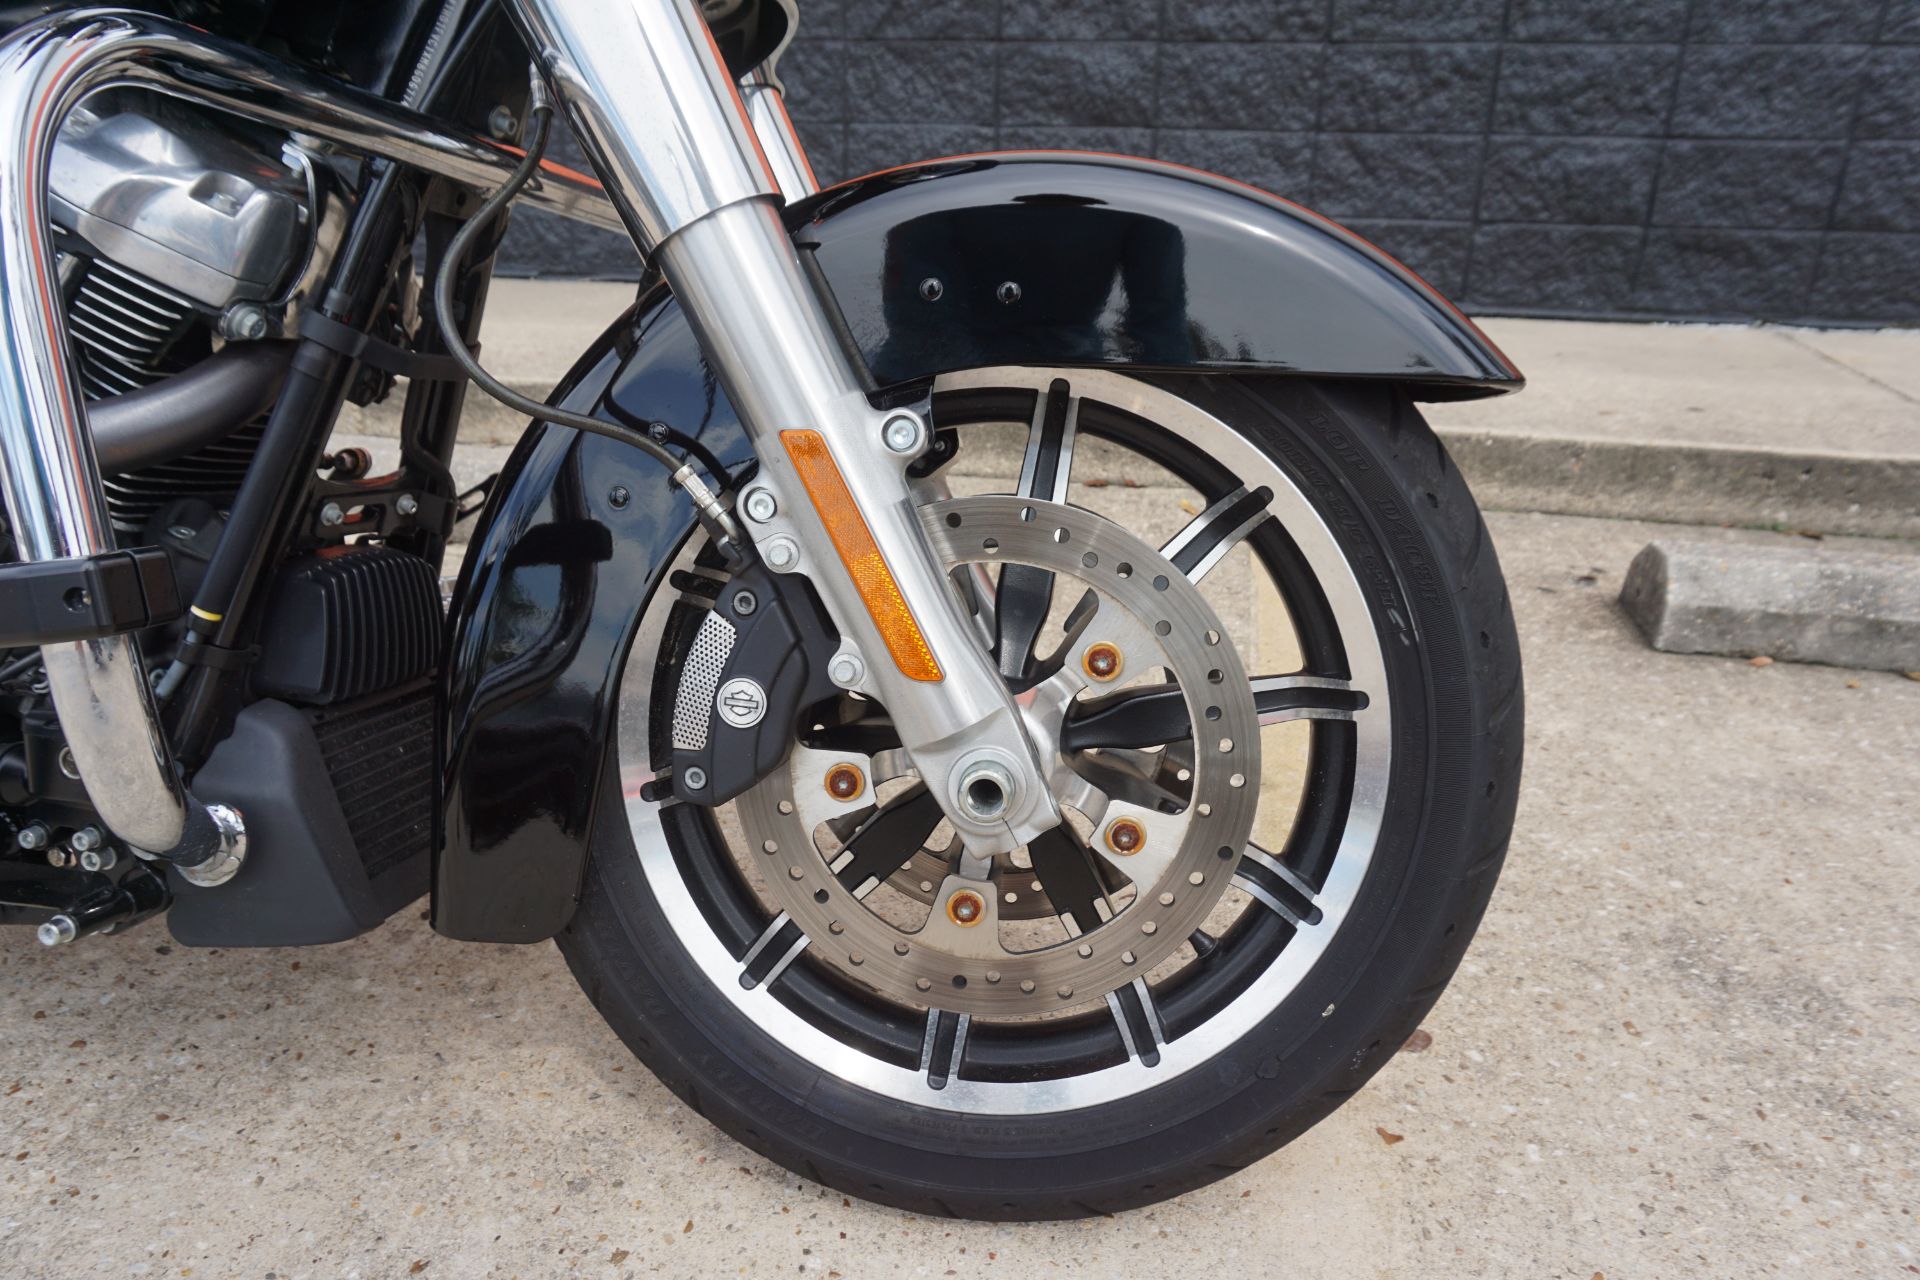 2021 Harley-Davidson Electra Glide® Standard in Metairie, Louisiana - Photo 2